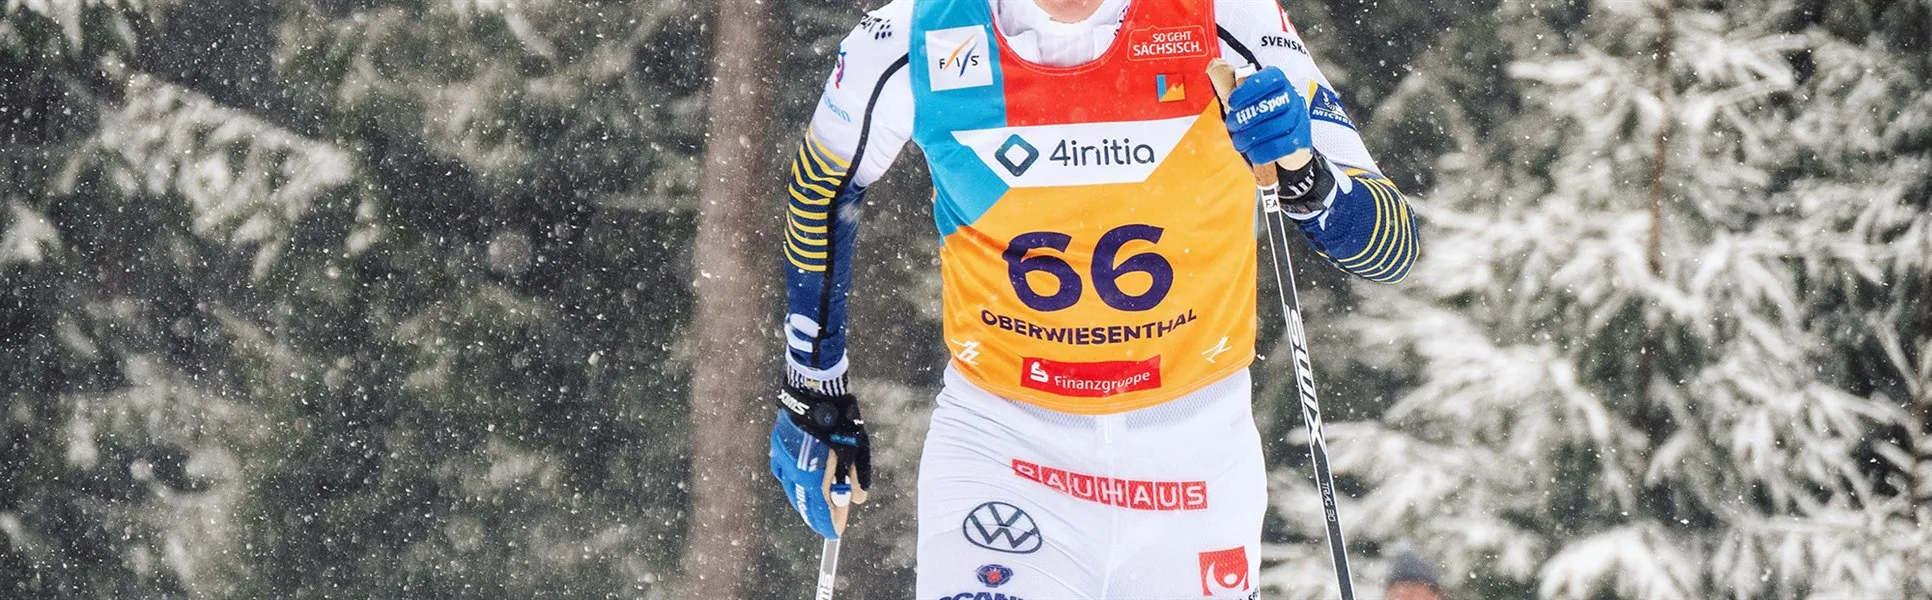 Fredrik Andersson längdskidåkare